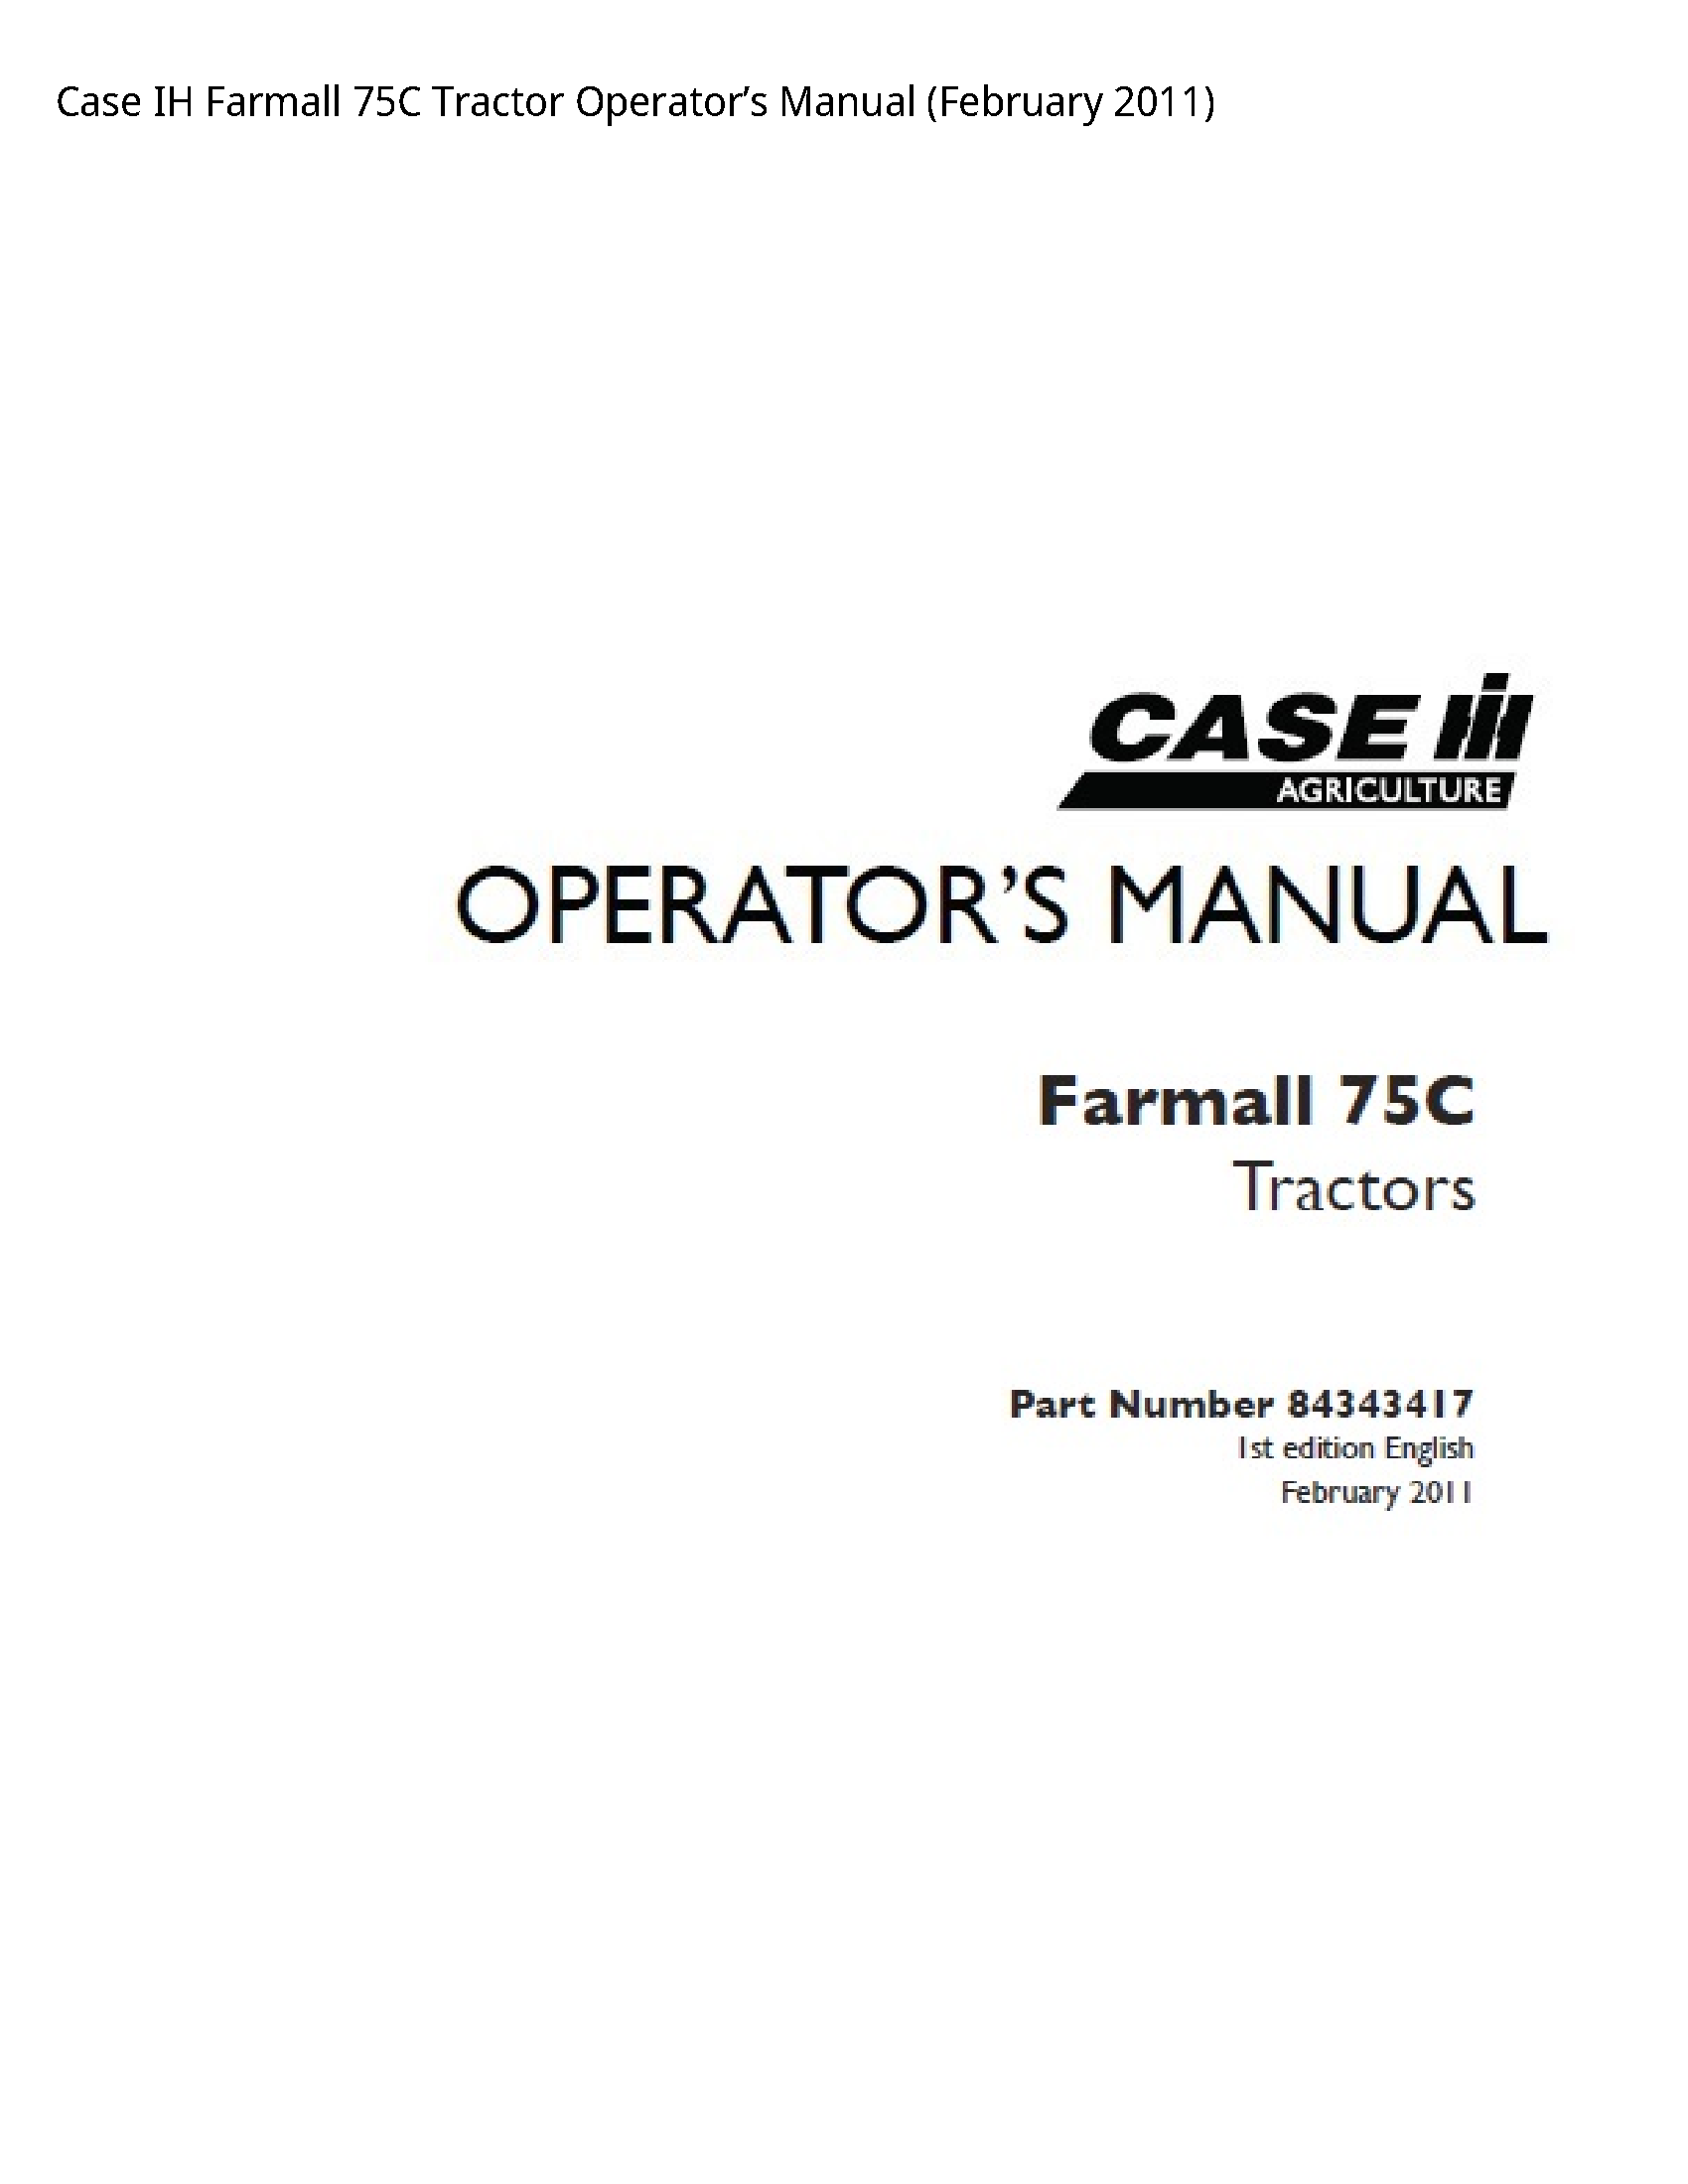 Case/Case IH 75C IH Farmall Tractor Operator’s manual